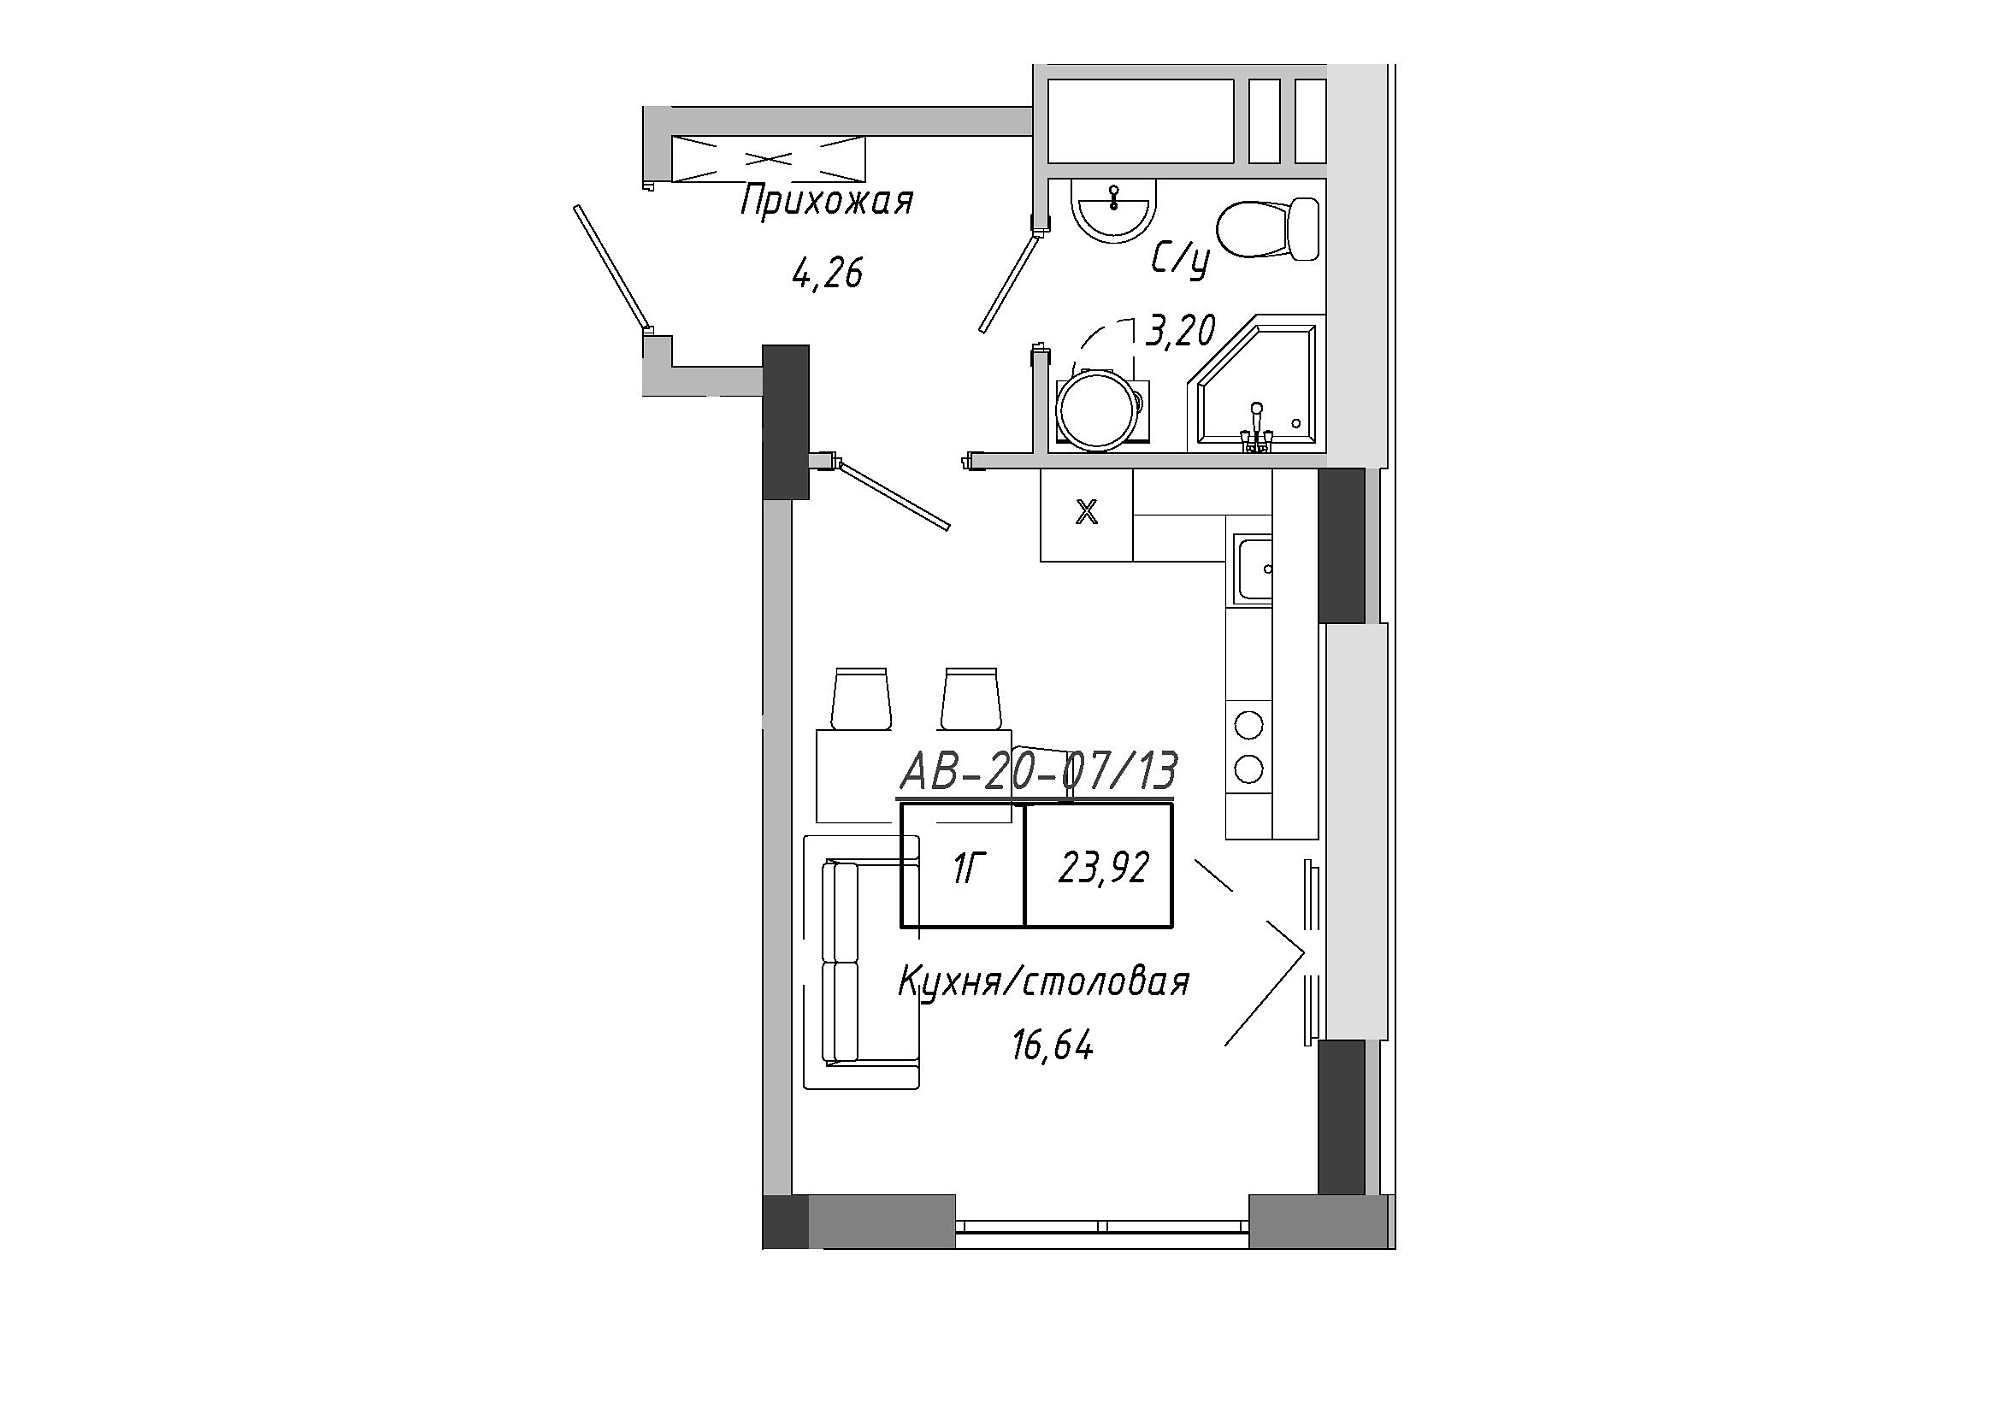 Planning Smart flats area 23.4m2, AB-20-07/00013.